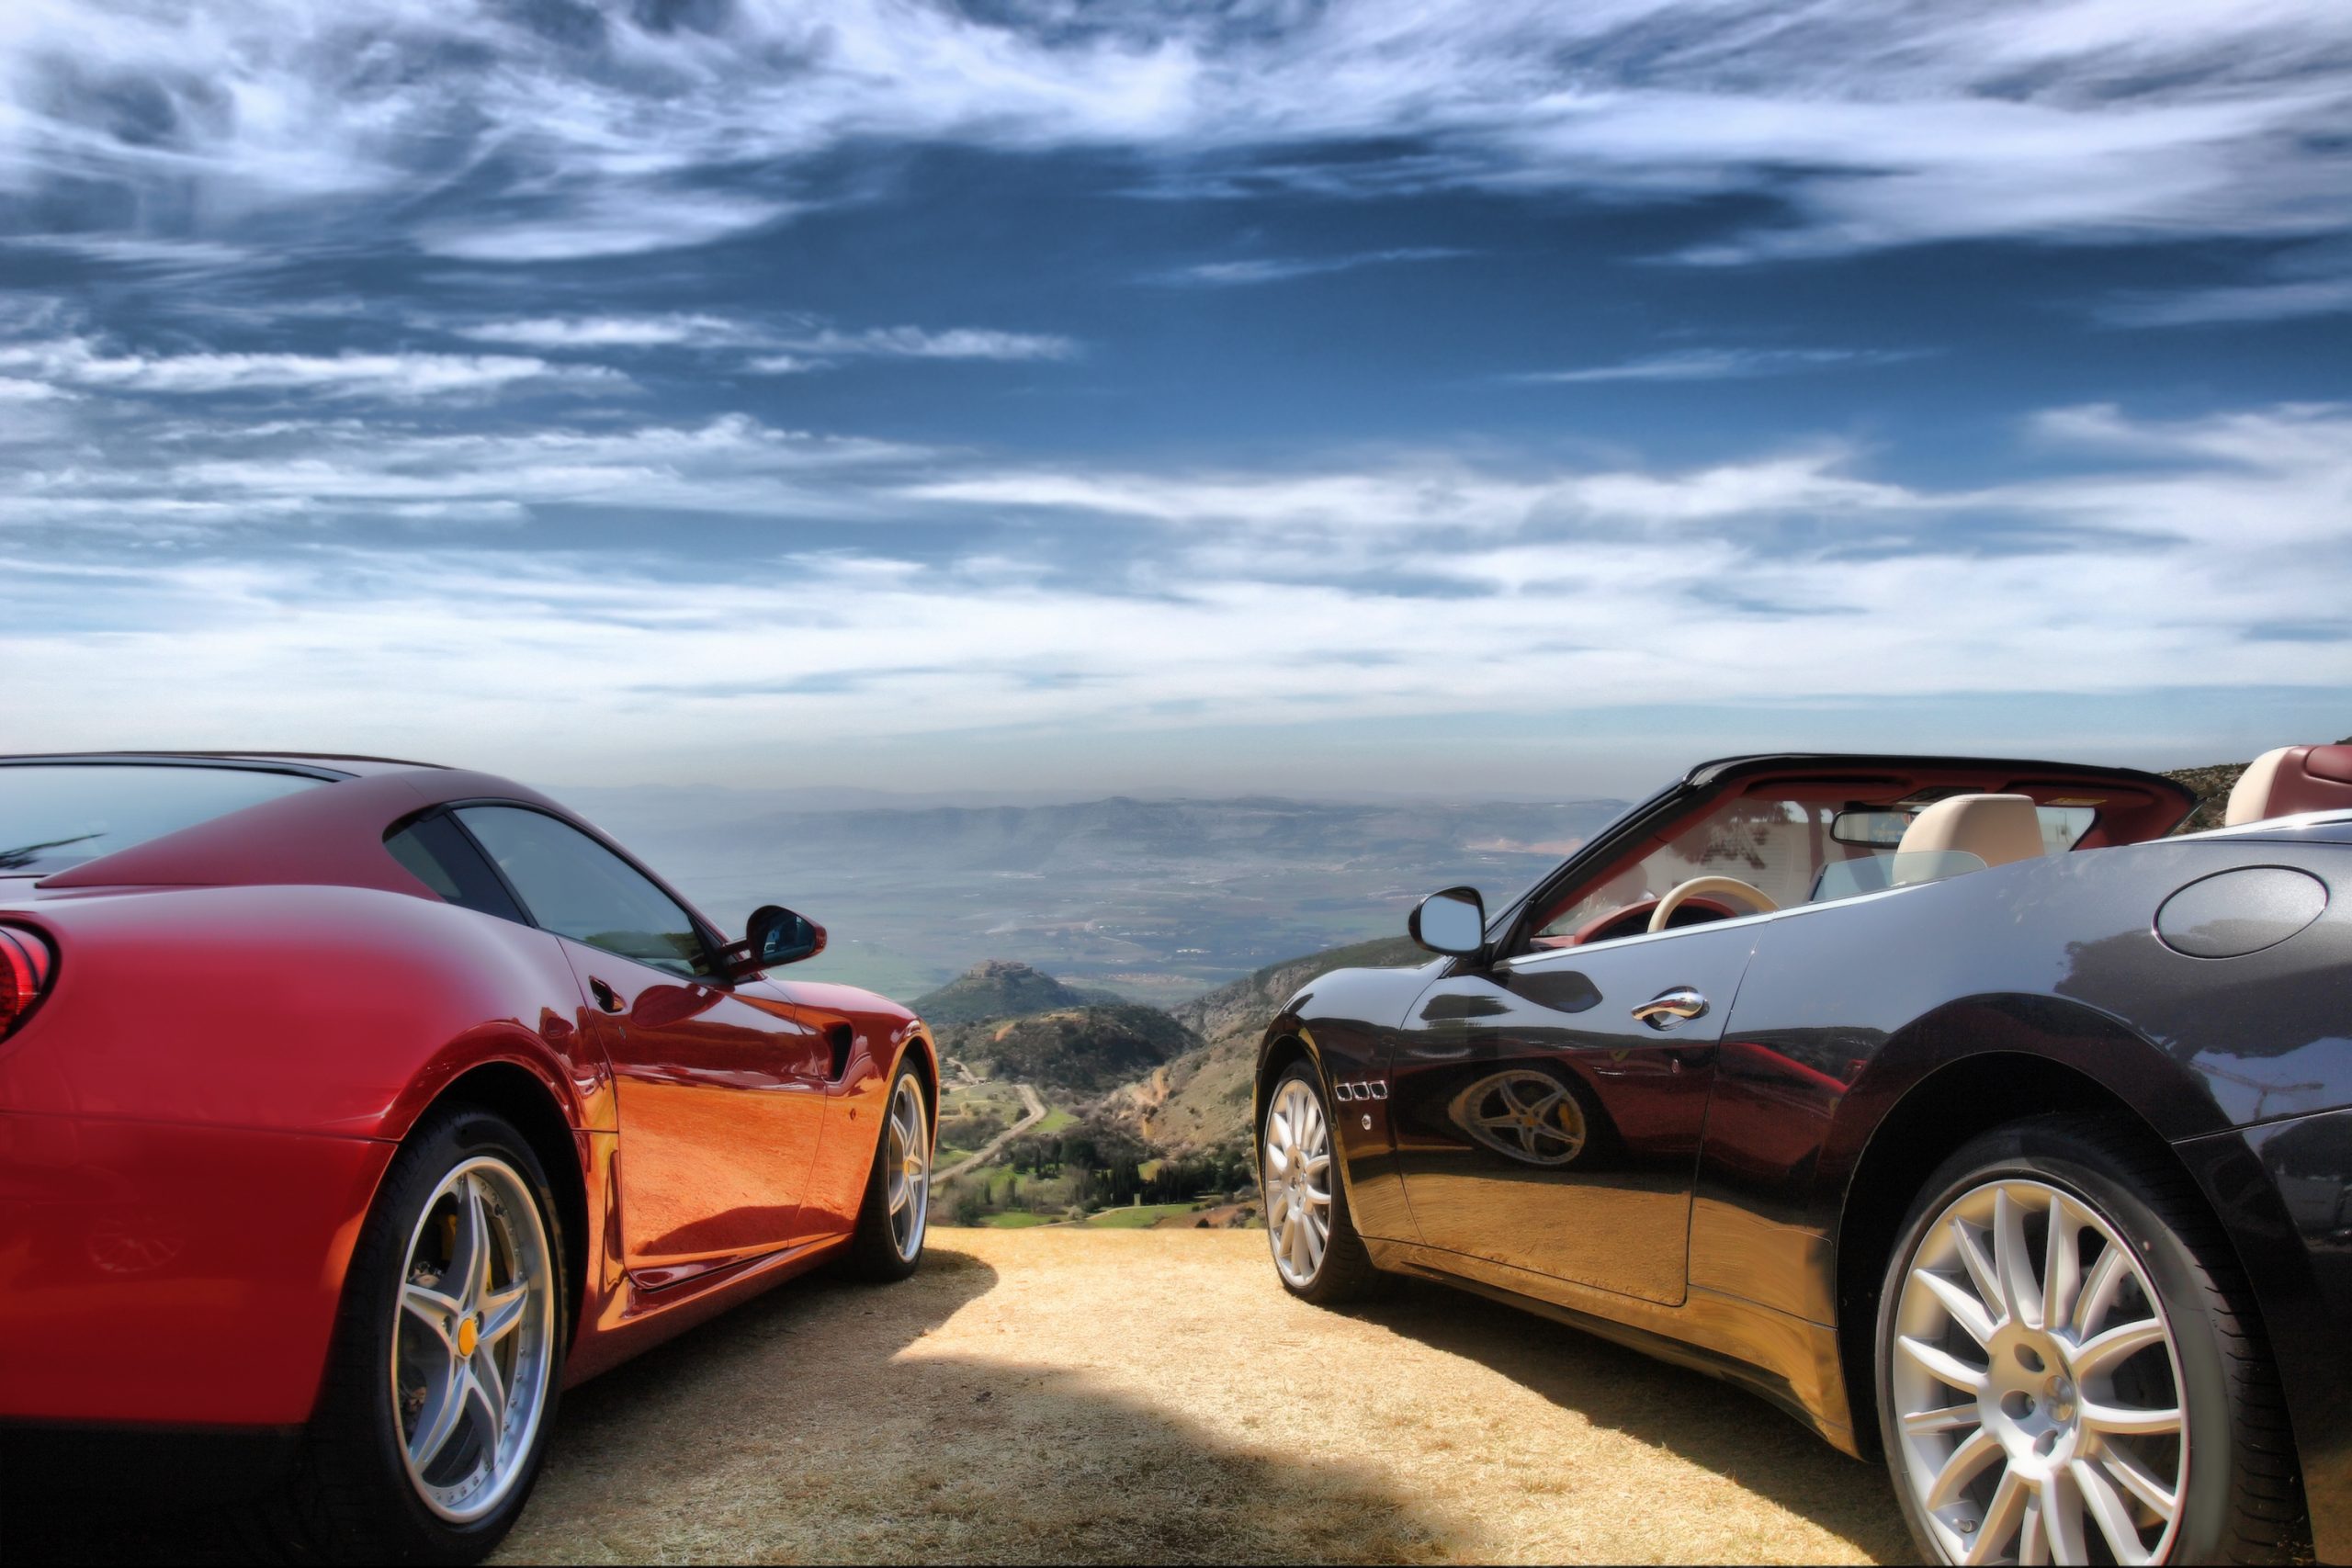 Luxury cars parked on scenic overlook